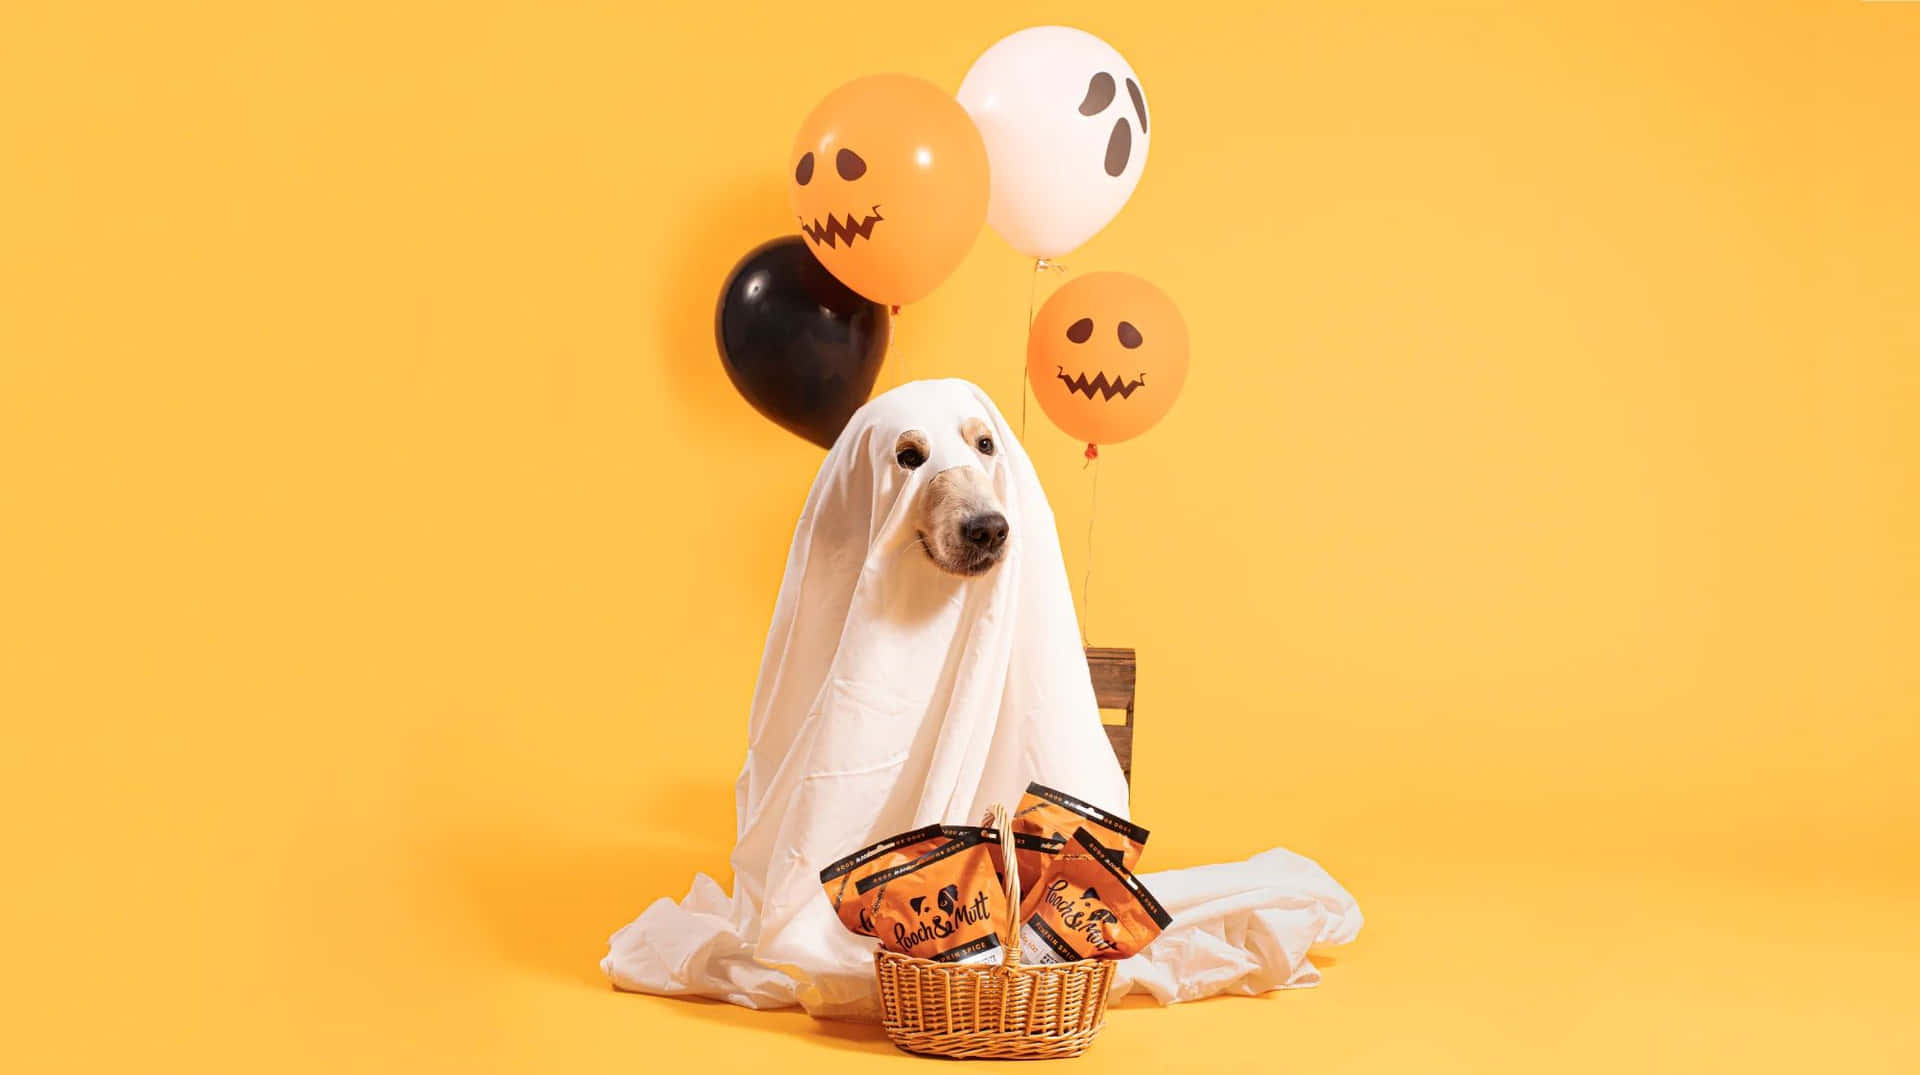 Halloween Ghost Dog With Balloonsand Treats.jpg Wallpaper